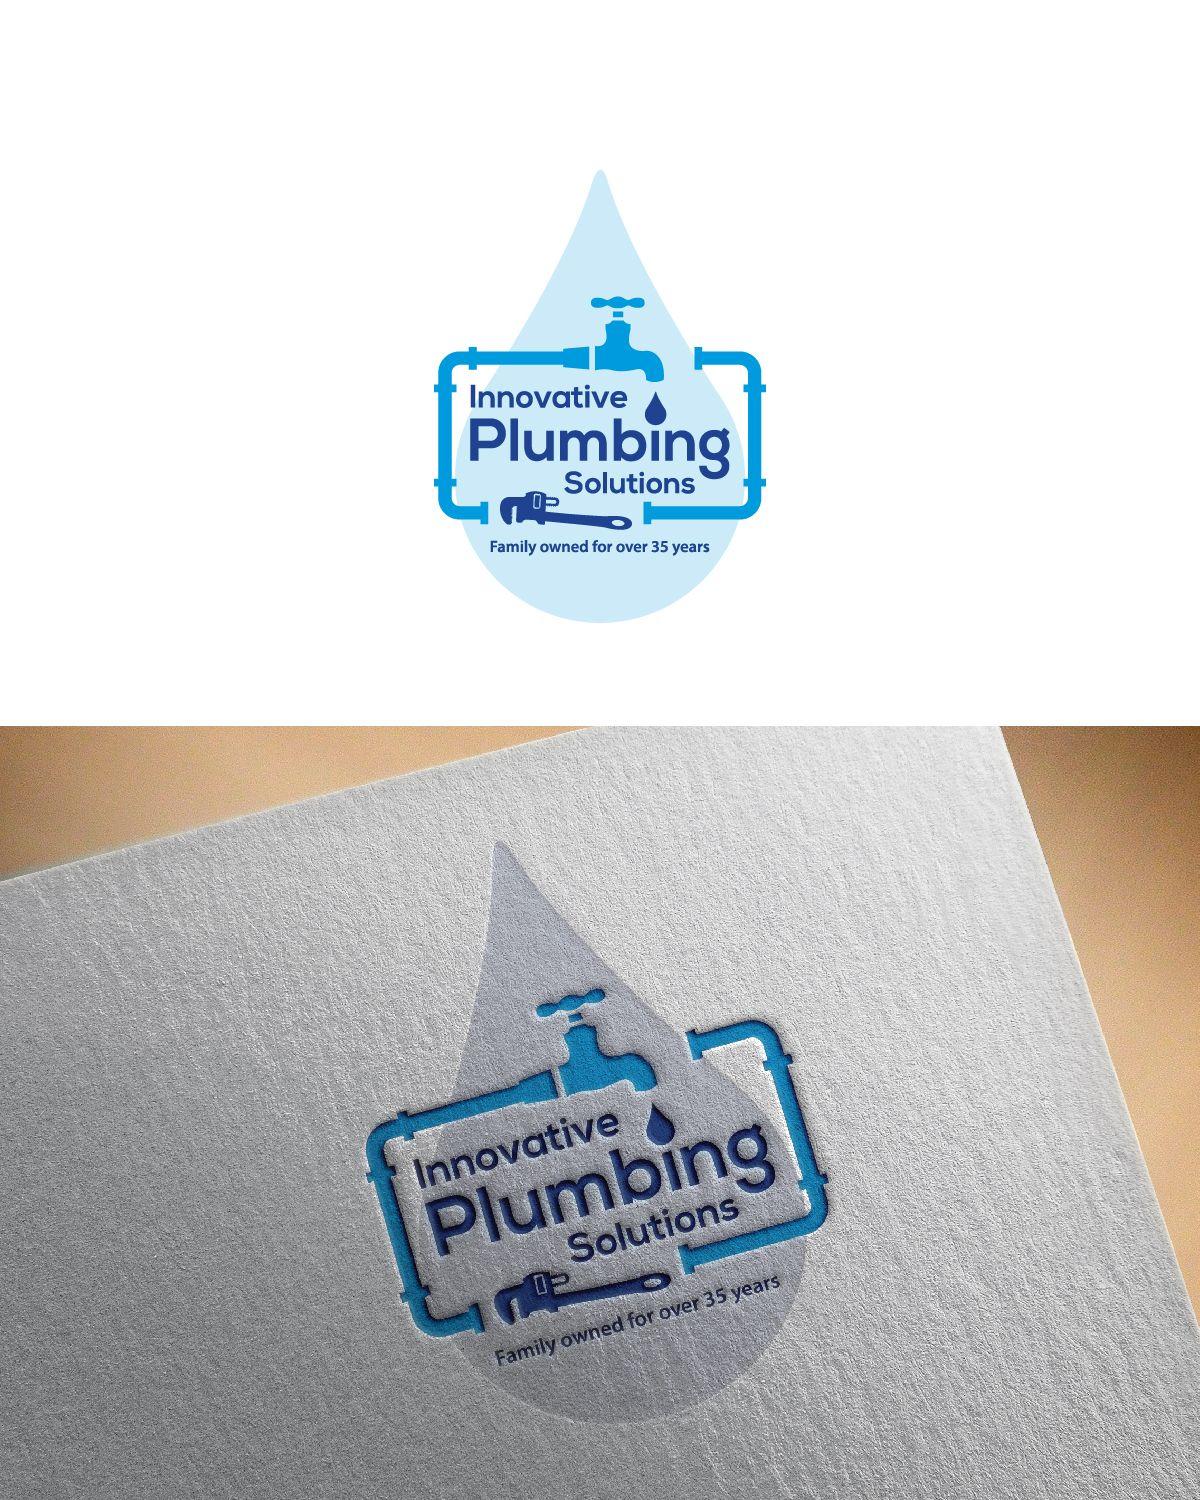 Plumbing Company Logo - Bold, Masculine, It Company Logo Design for Innovative Plumbing